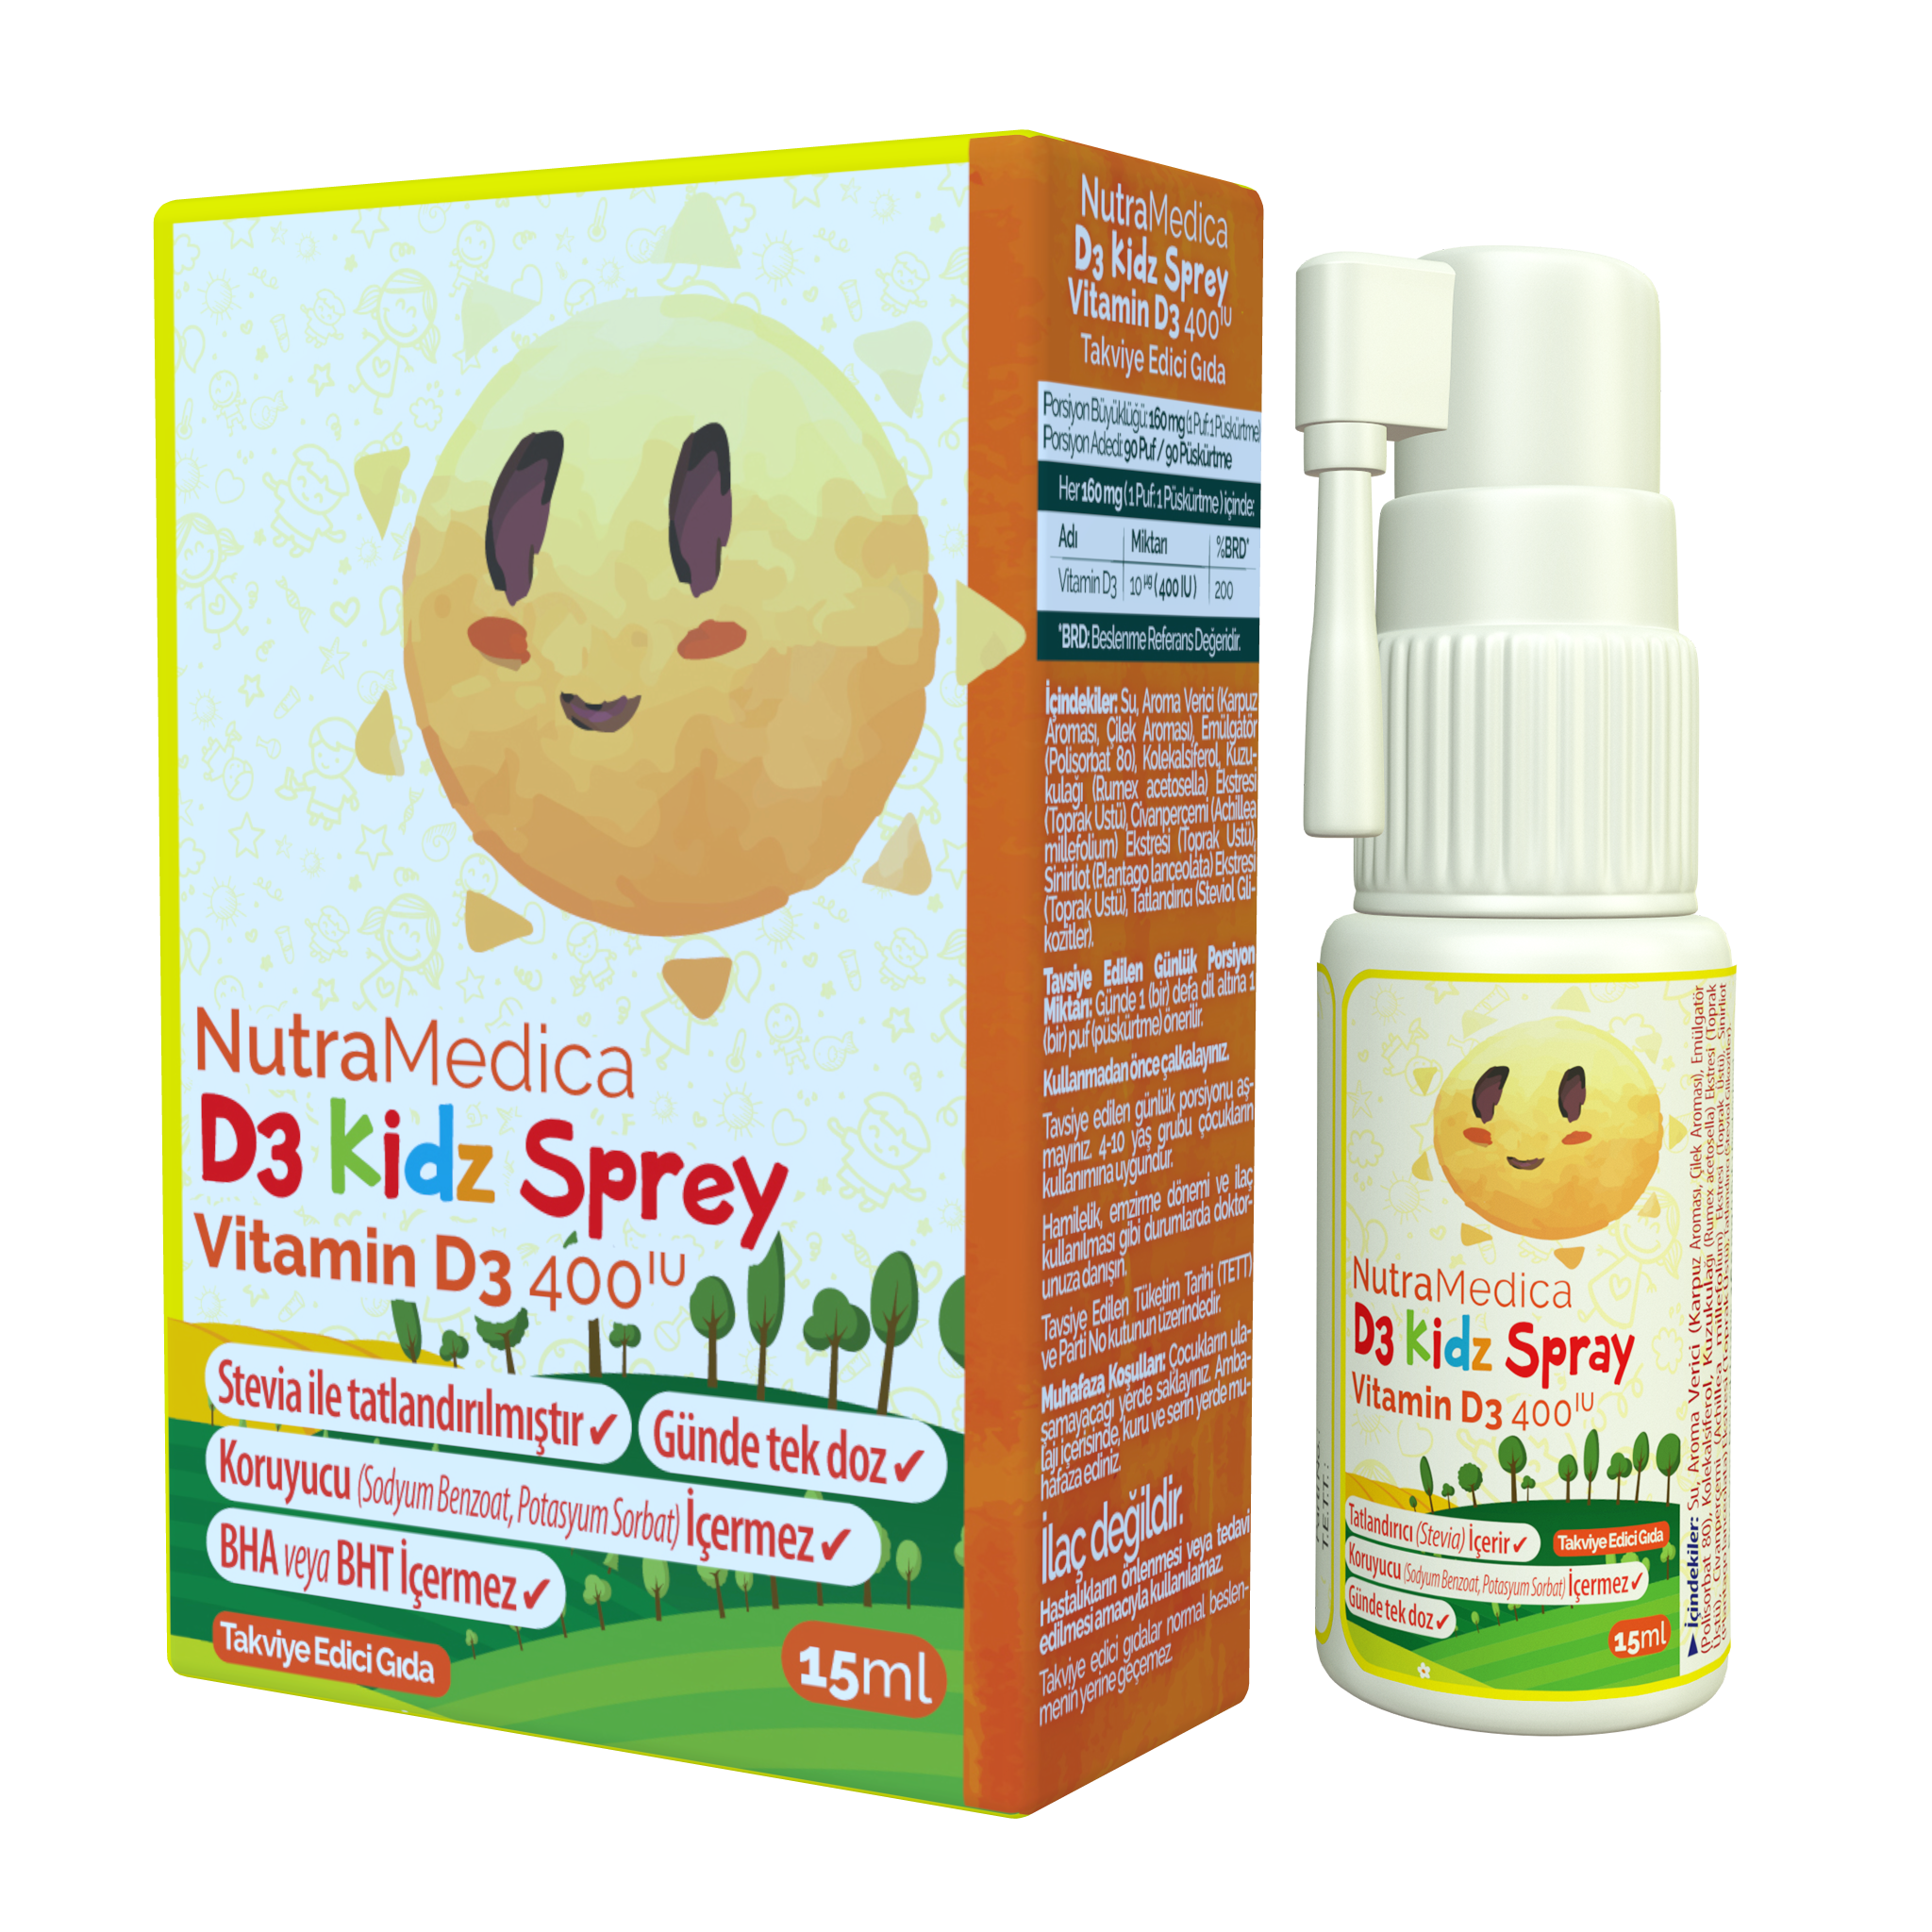 NutraMedica D3 Kidz Sprey Vitamin D3 400 IU